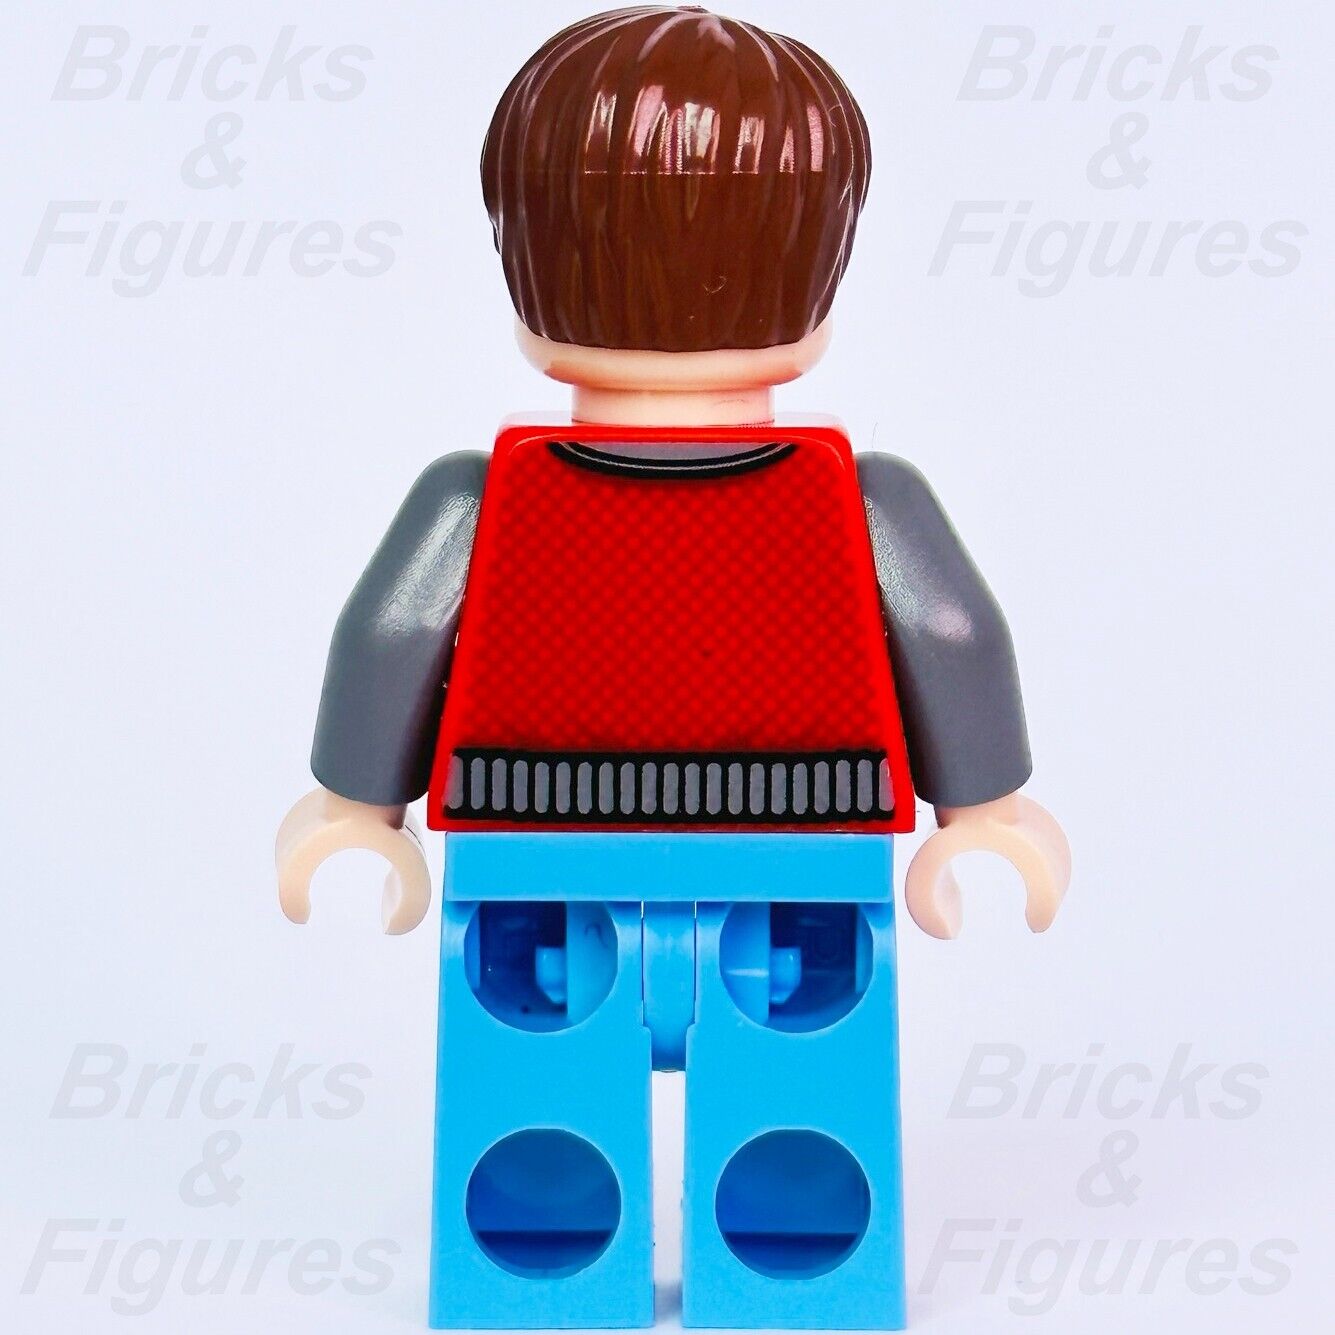 LEGO Marty McFly Minifigure Back to the Future Creator Expert 10300 btf001 New - Bricks & Figures